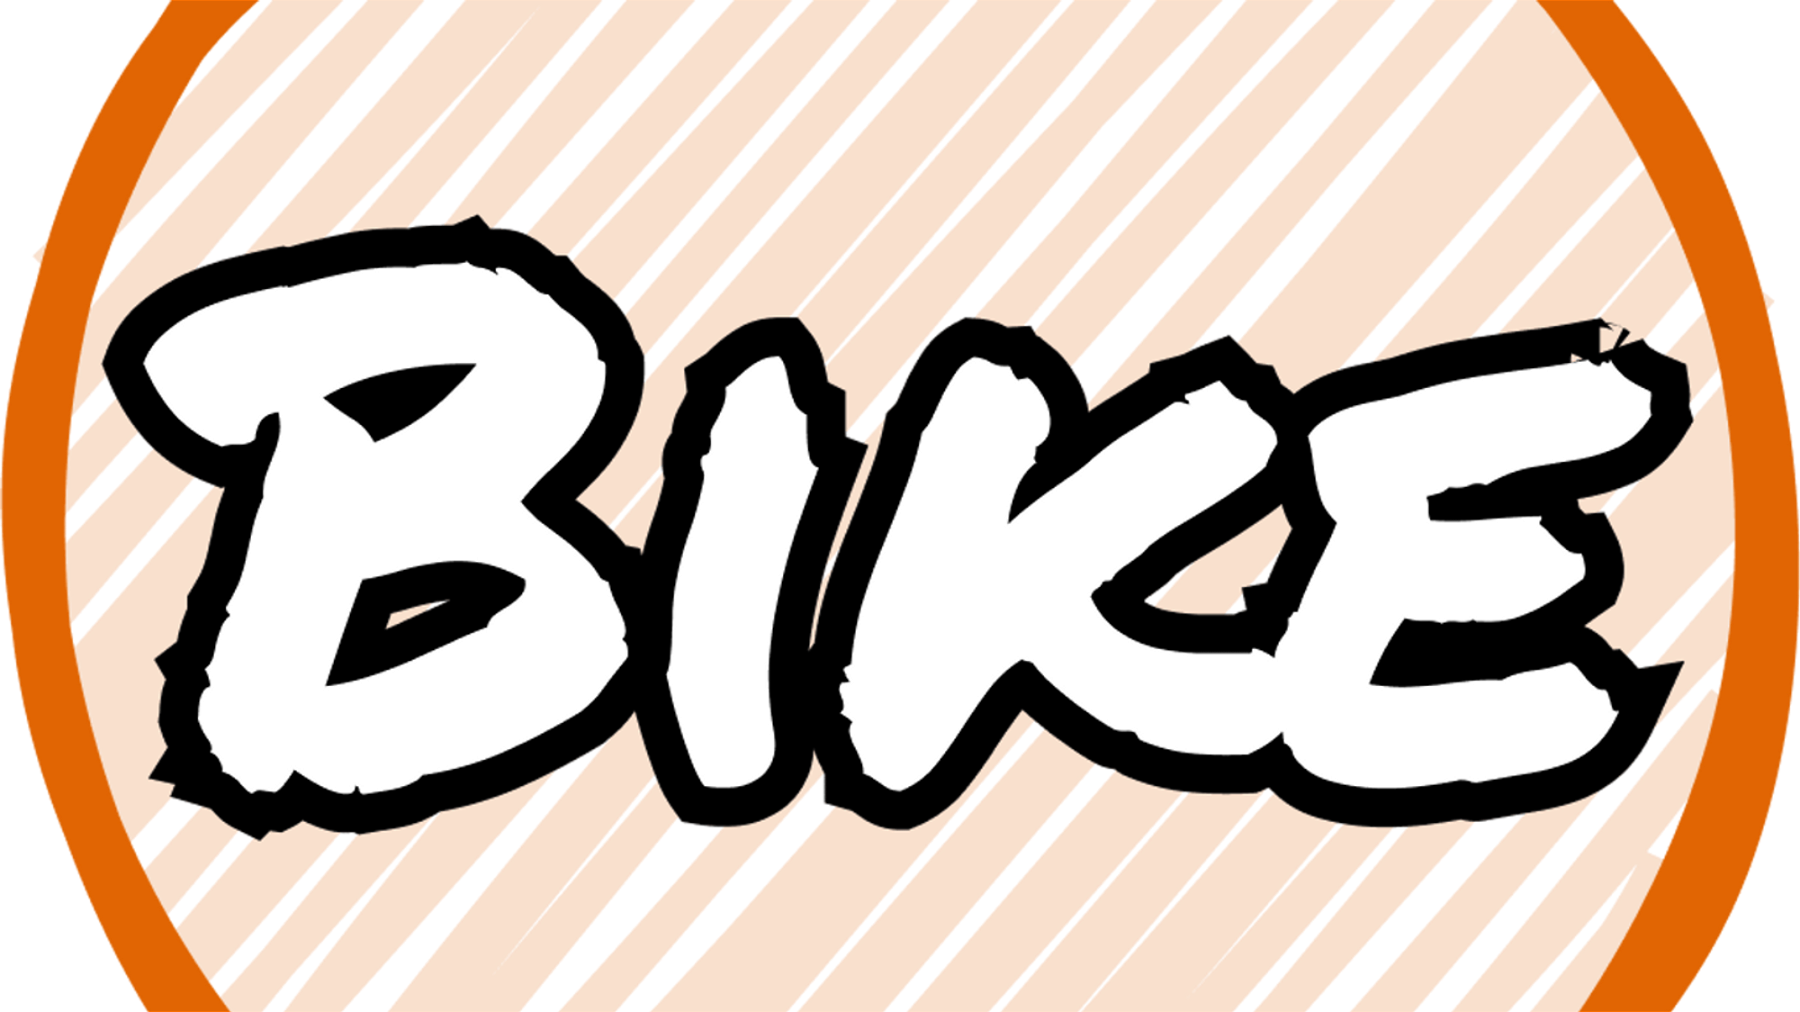 Bike | Blog by John Guerra